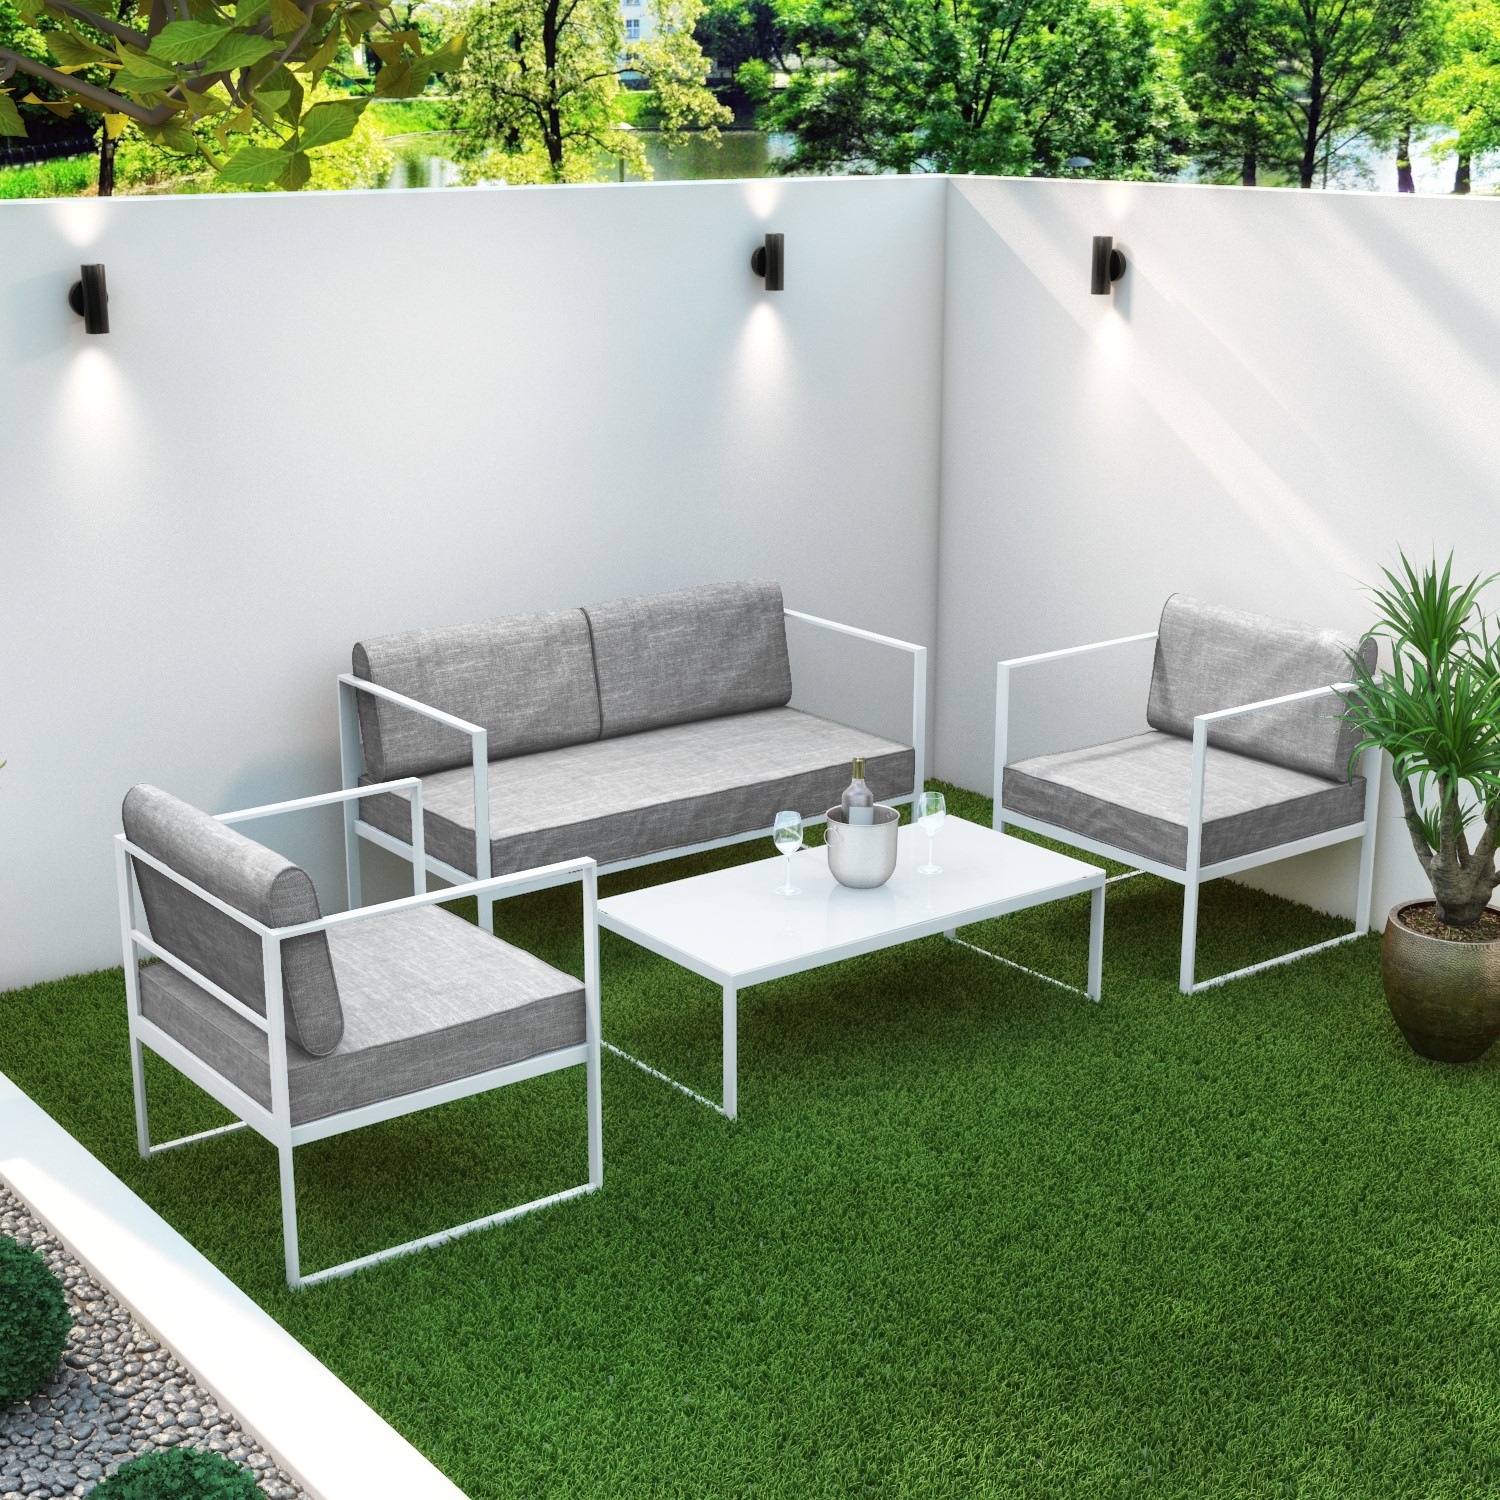 4 Piece White Metal Patio Garden Furniture Set with Table